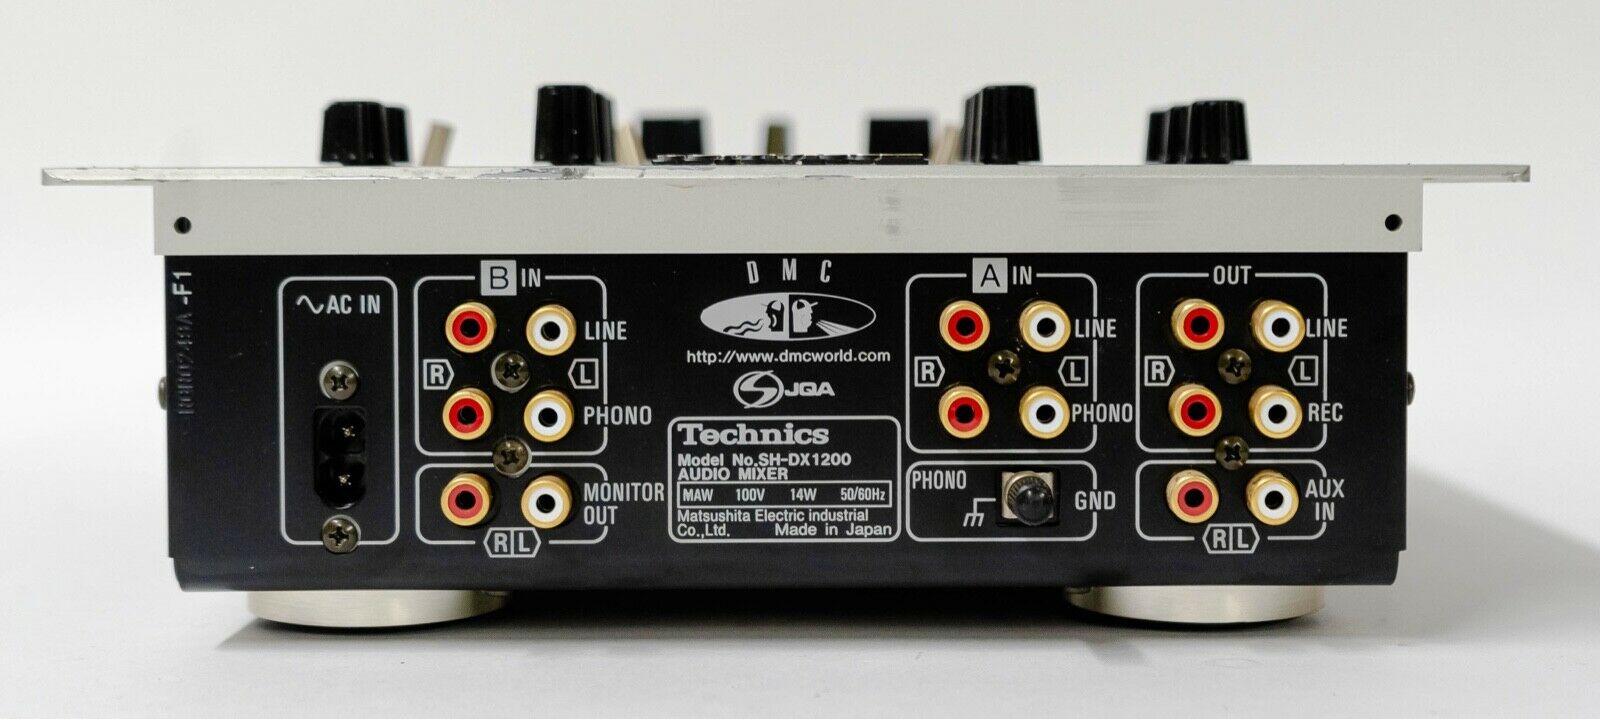 Technics SH-DX1200 - Official World DJ Championship Mixer - Free Shipping